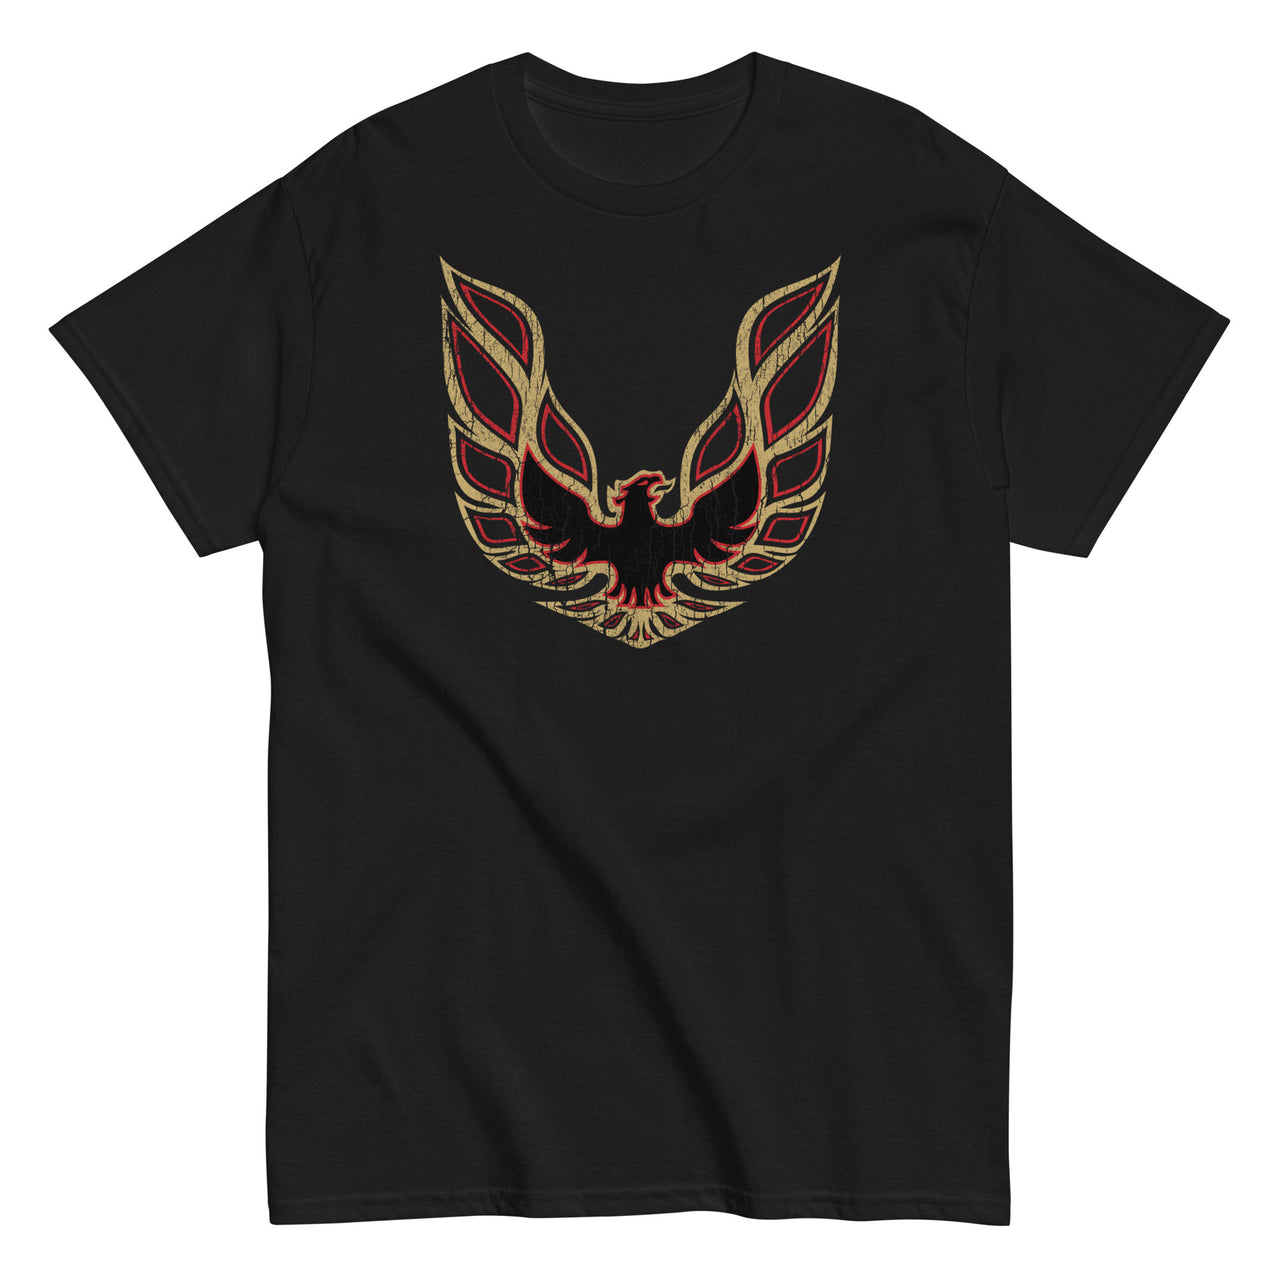 Traditional Trans Am Firebird Logo T-Shirt in black